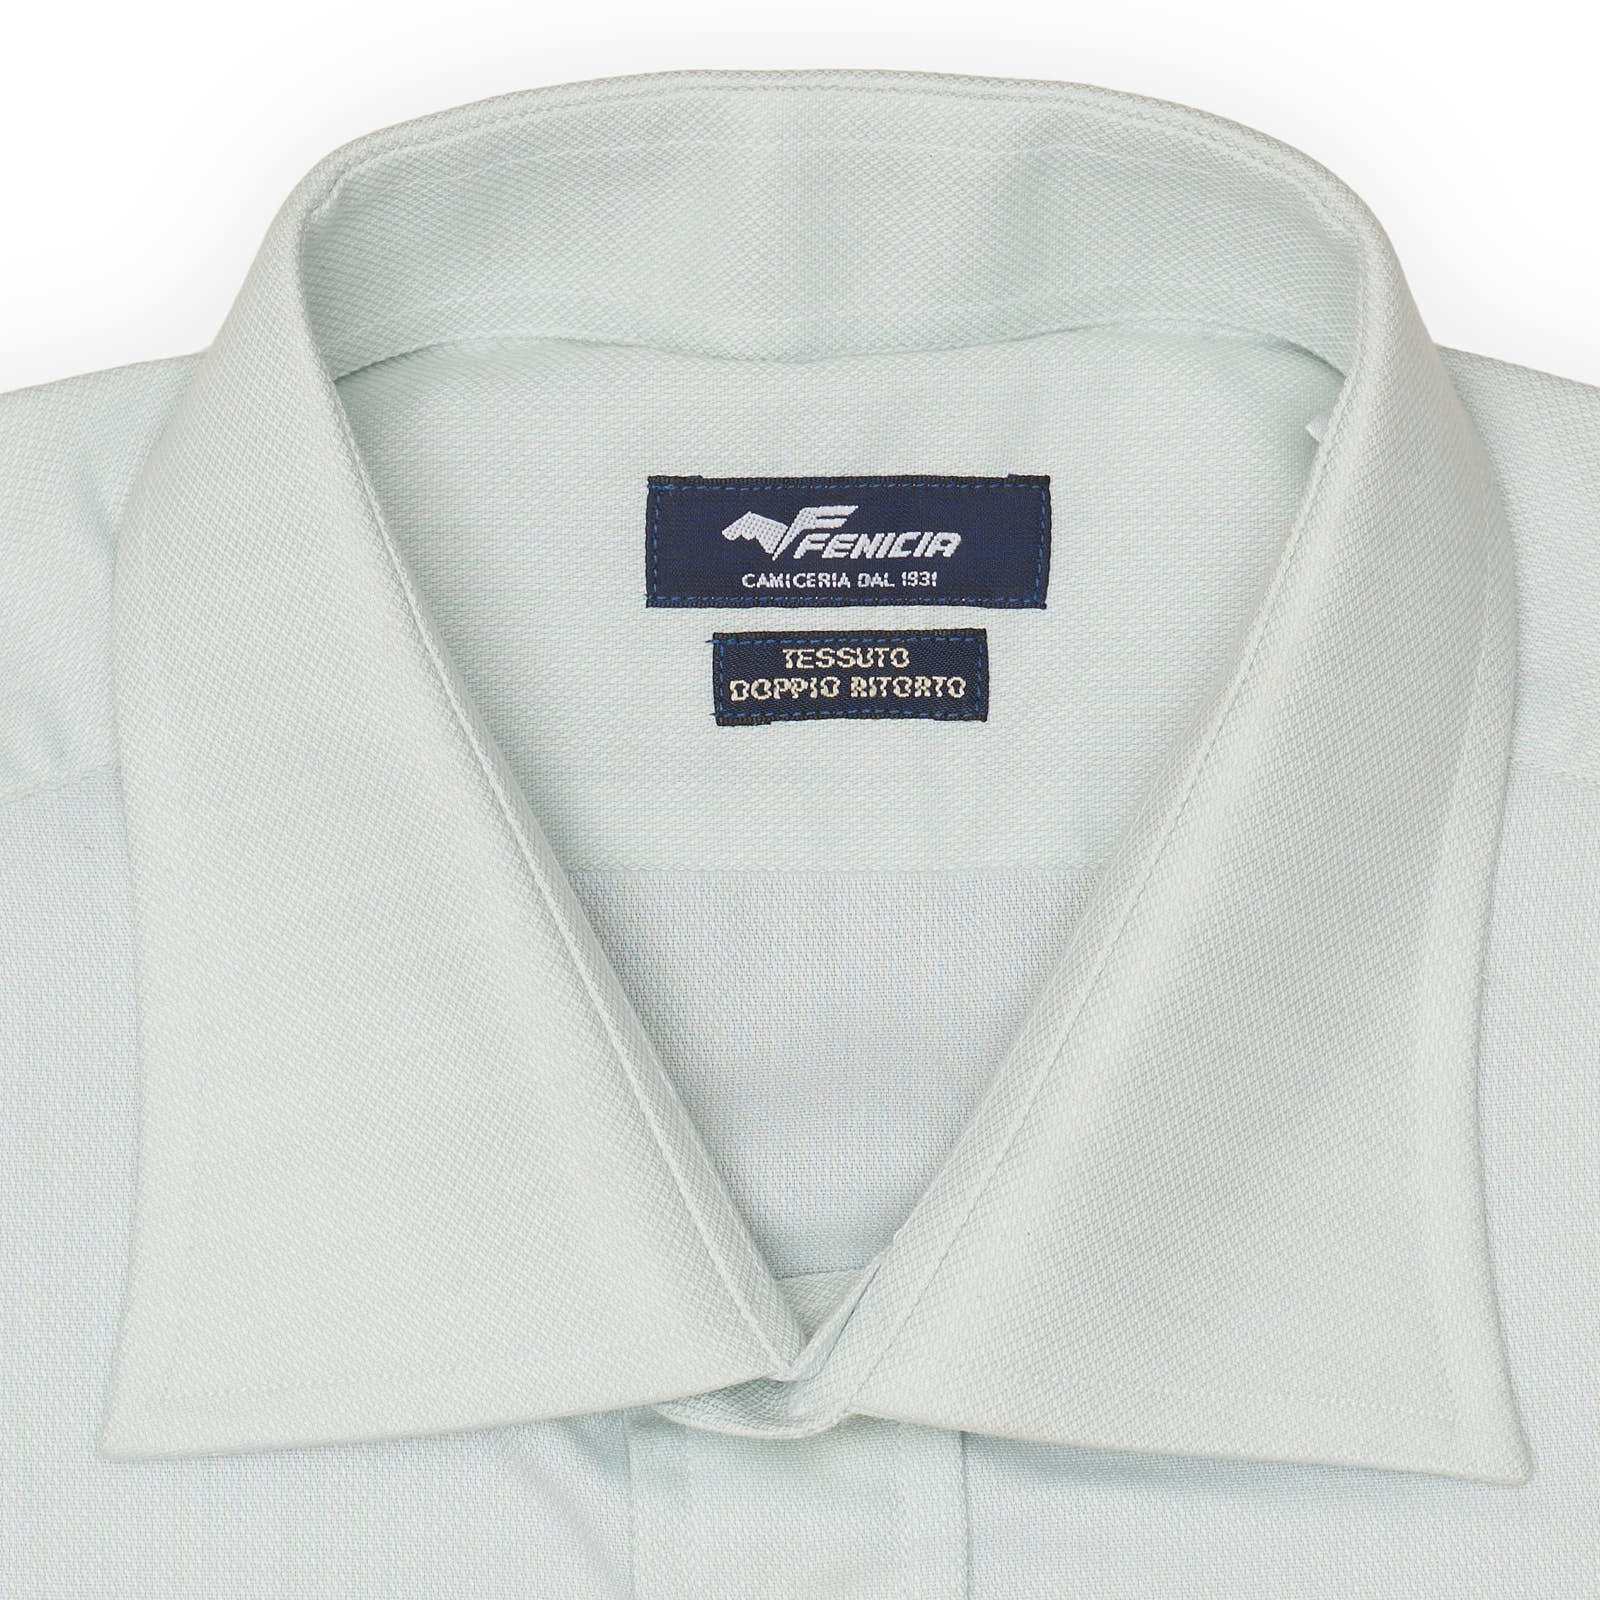 FENICIA Mint Green Royal Oxford Cotton Short Sleeve Shirt EU XL NEW US 17